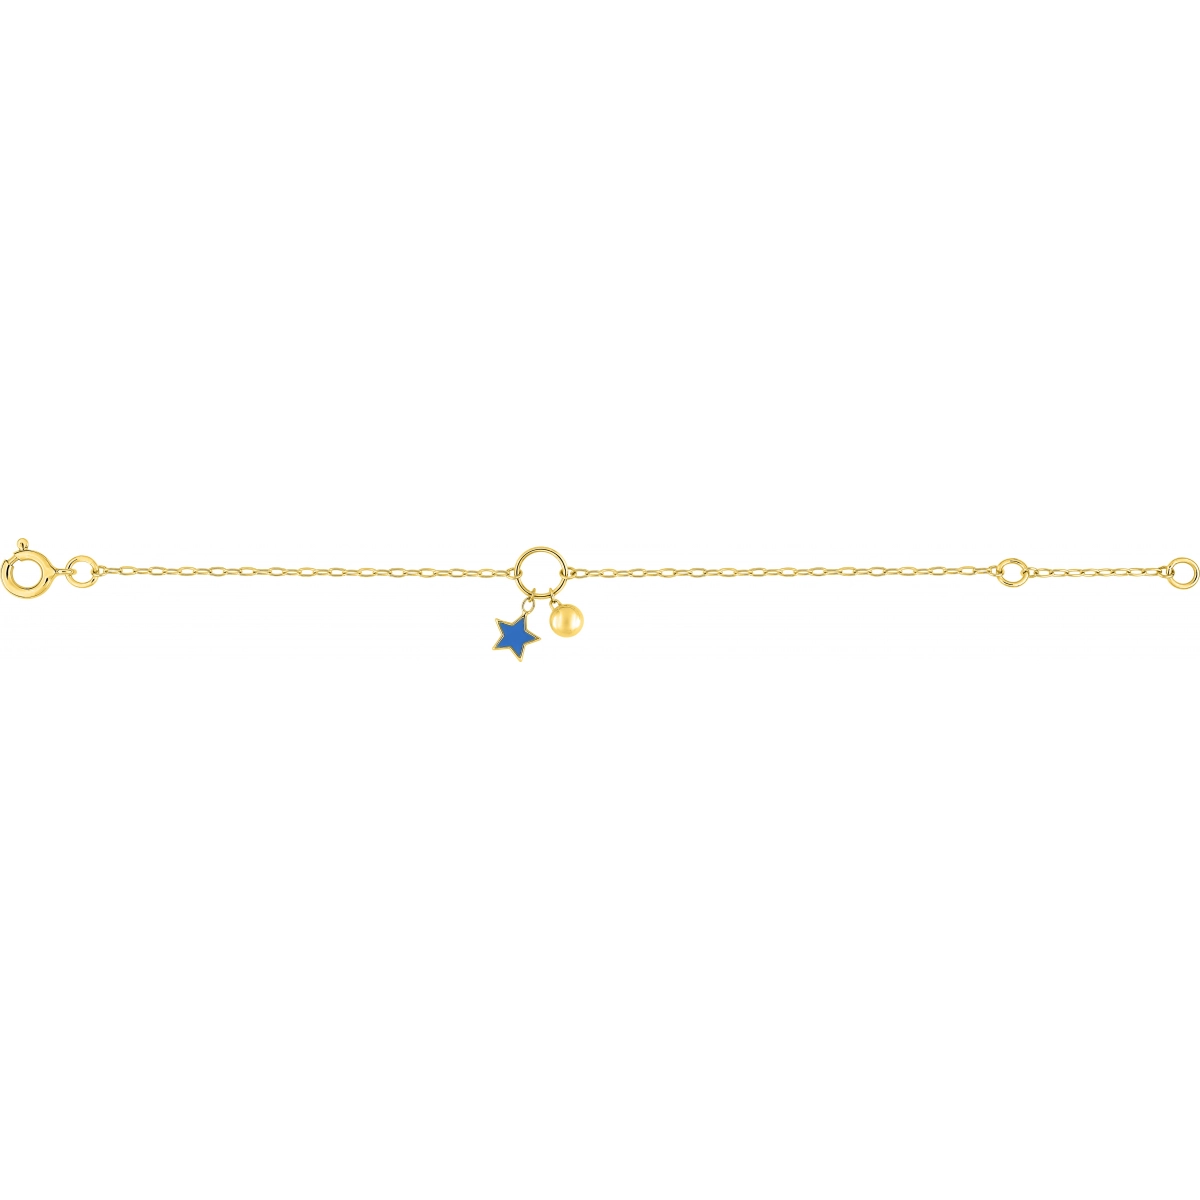 Bracelet lacquer 9K YG Lua Blanca  510583.89 - Size 14